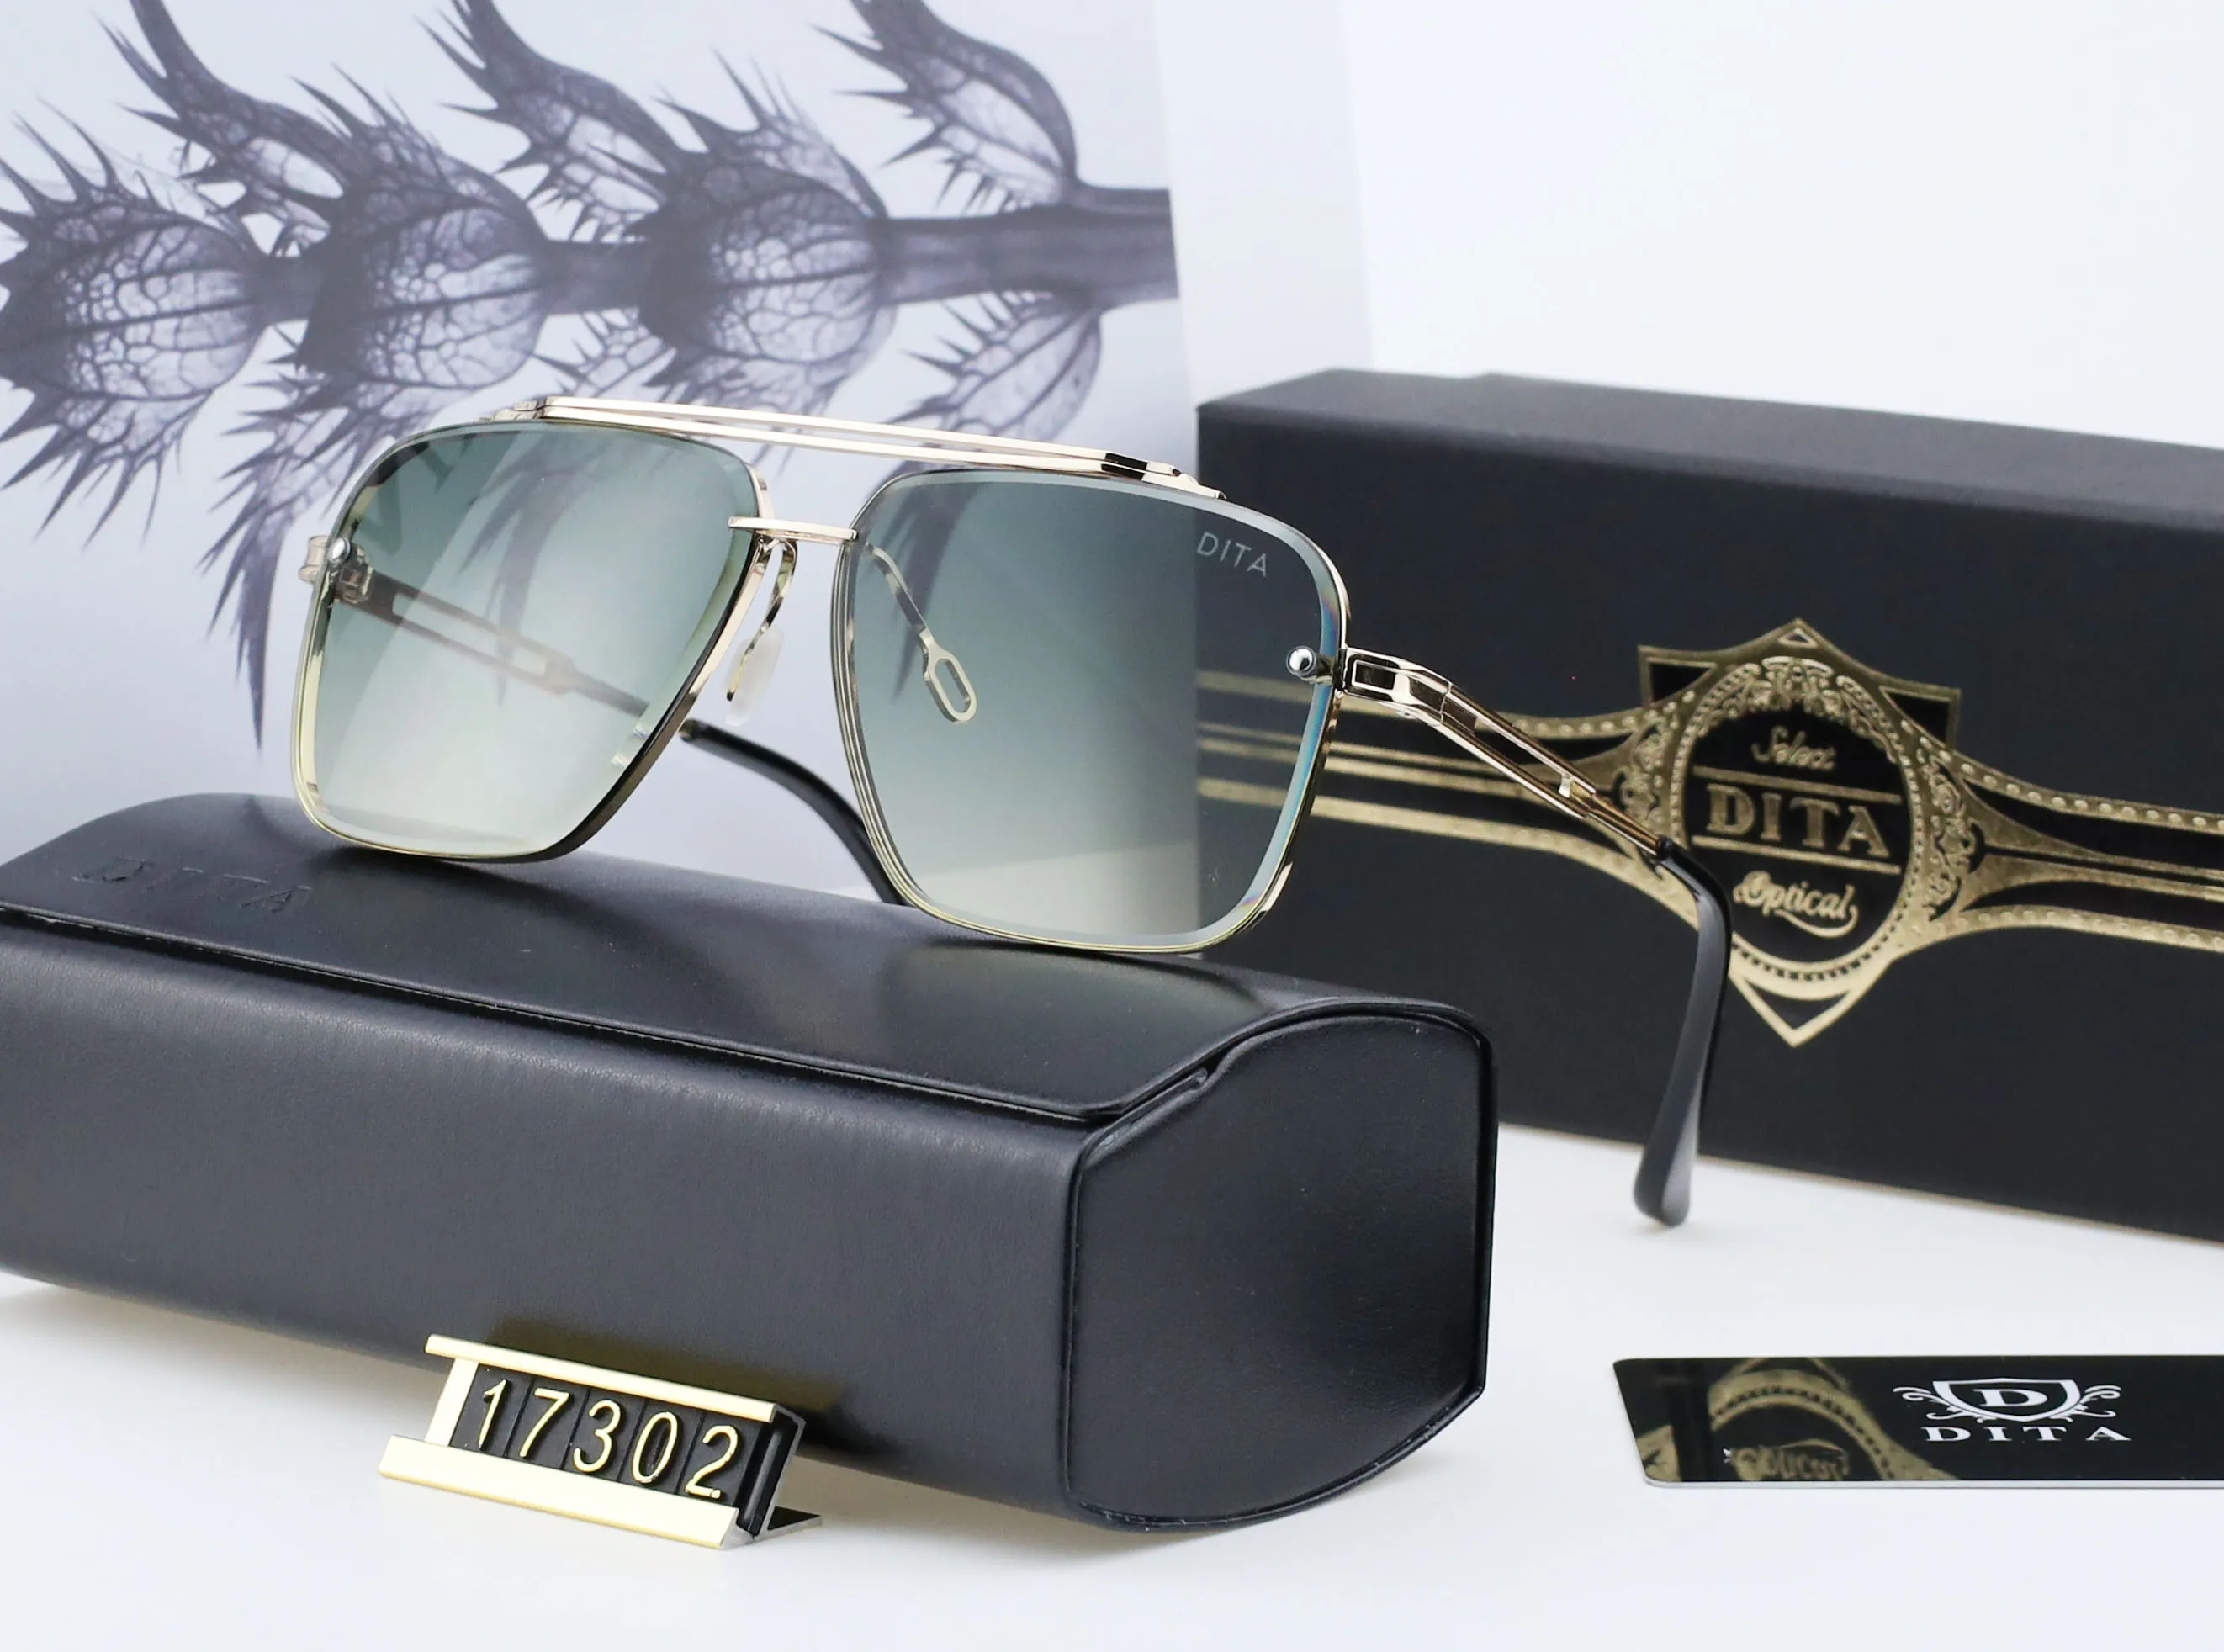 Top designer Dita 17302 Sunglasses men's and women's metal retro fashion designer black glasses door all match UV 400 Po340a